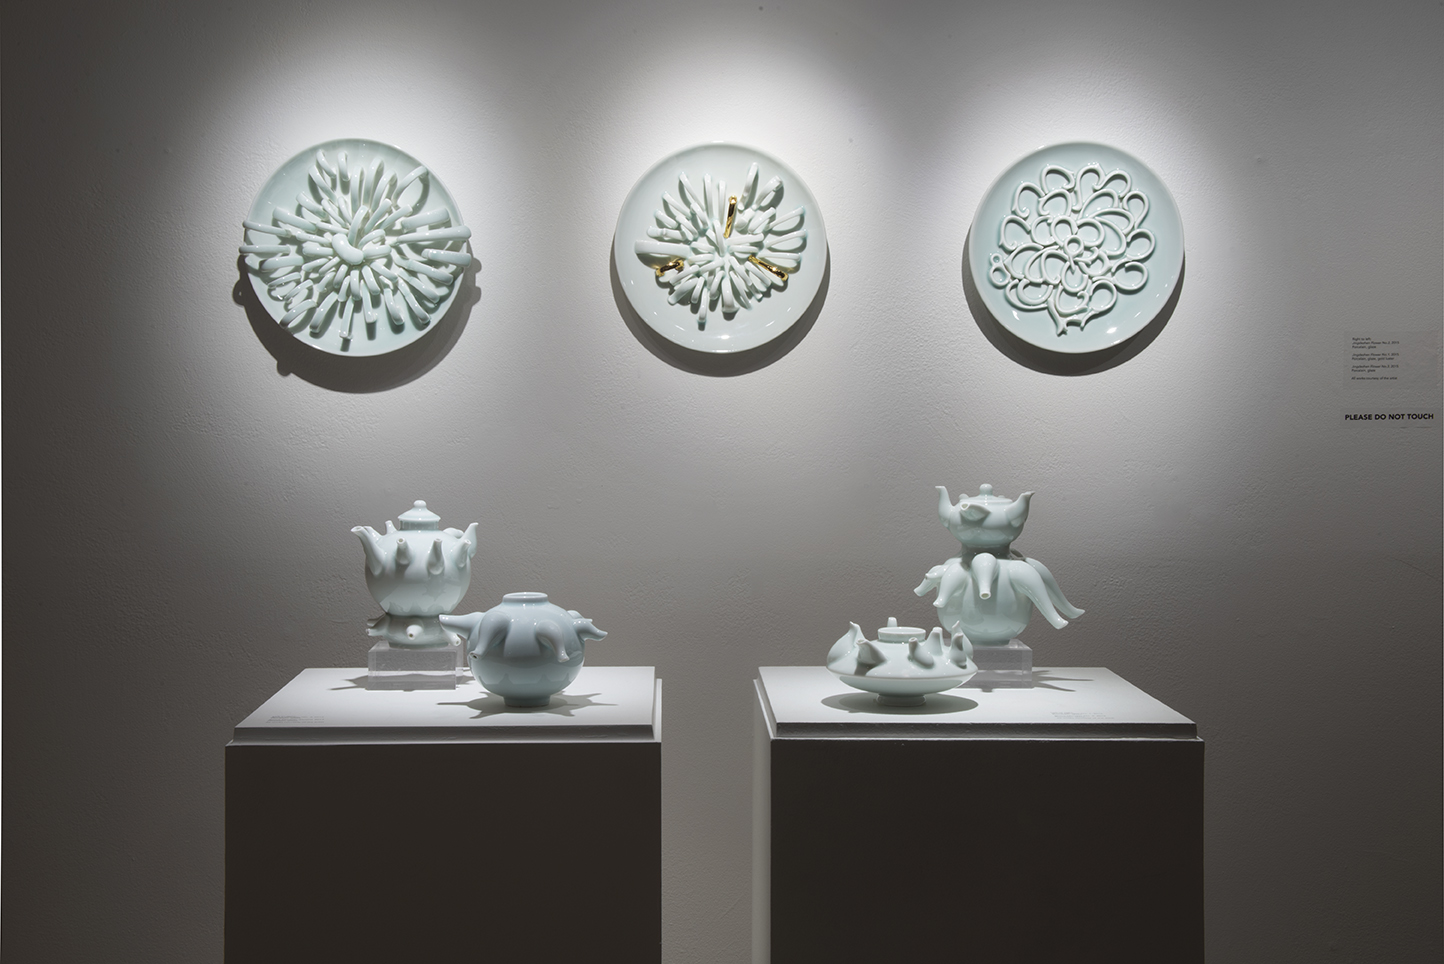 Made in China: New Ceramic Works by Keiko Fukazawa, installation view, 2016.